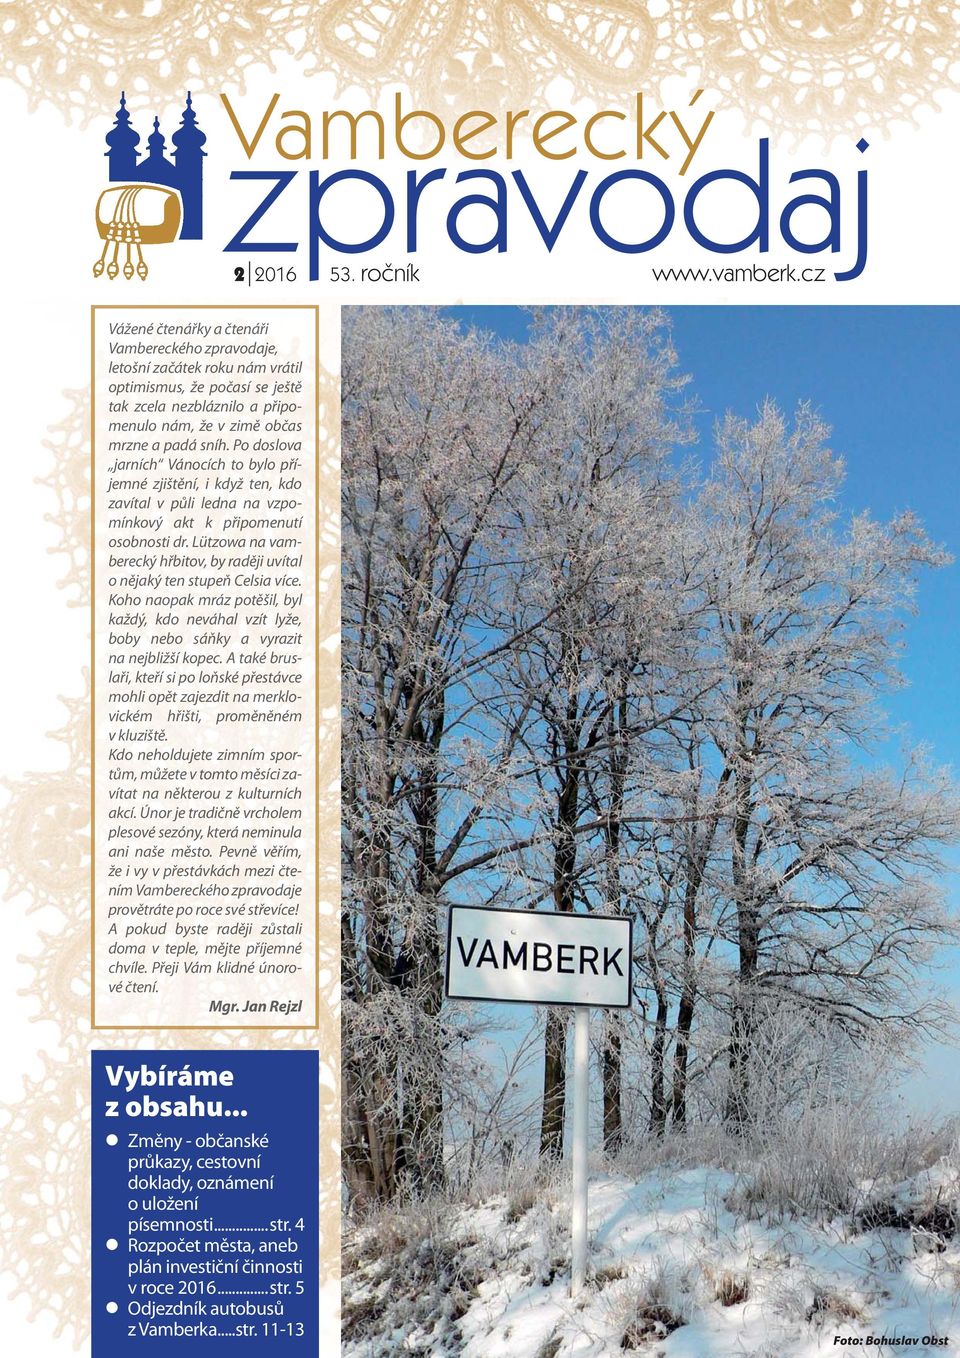 Vamberecký. zpravodaj - PDF Free Download